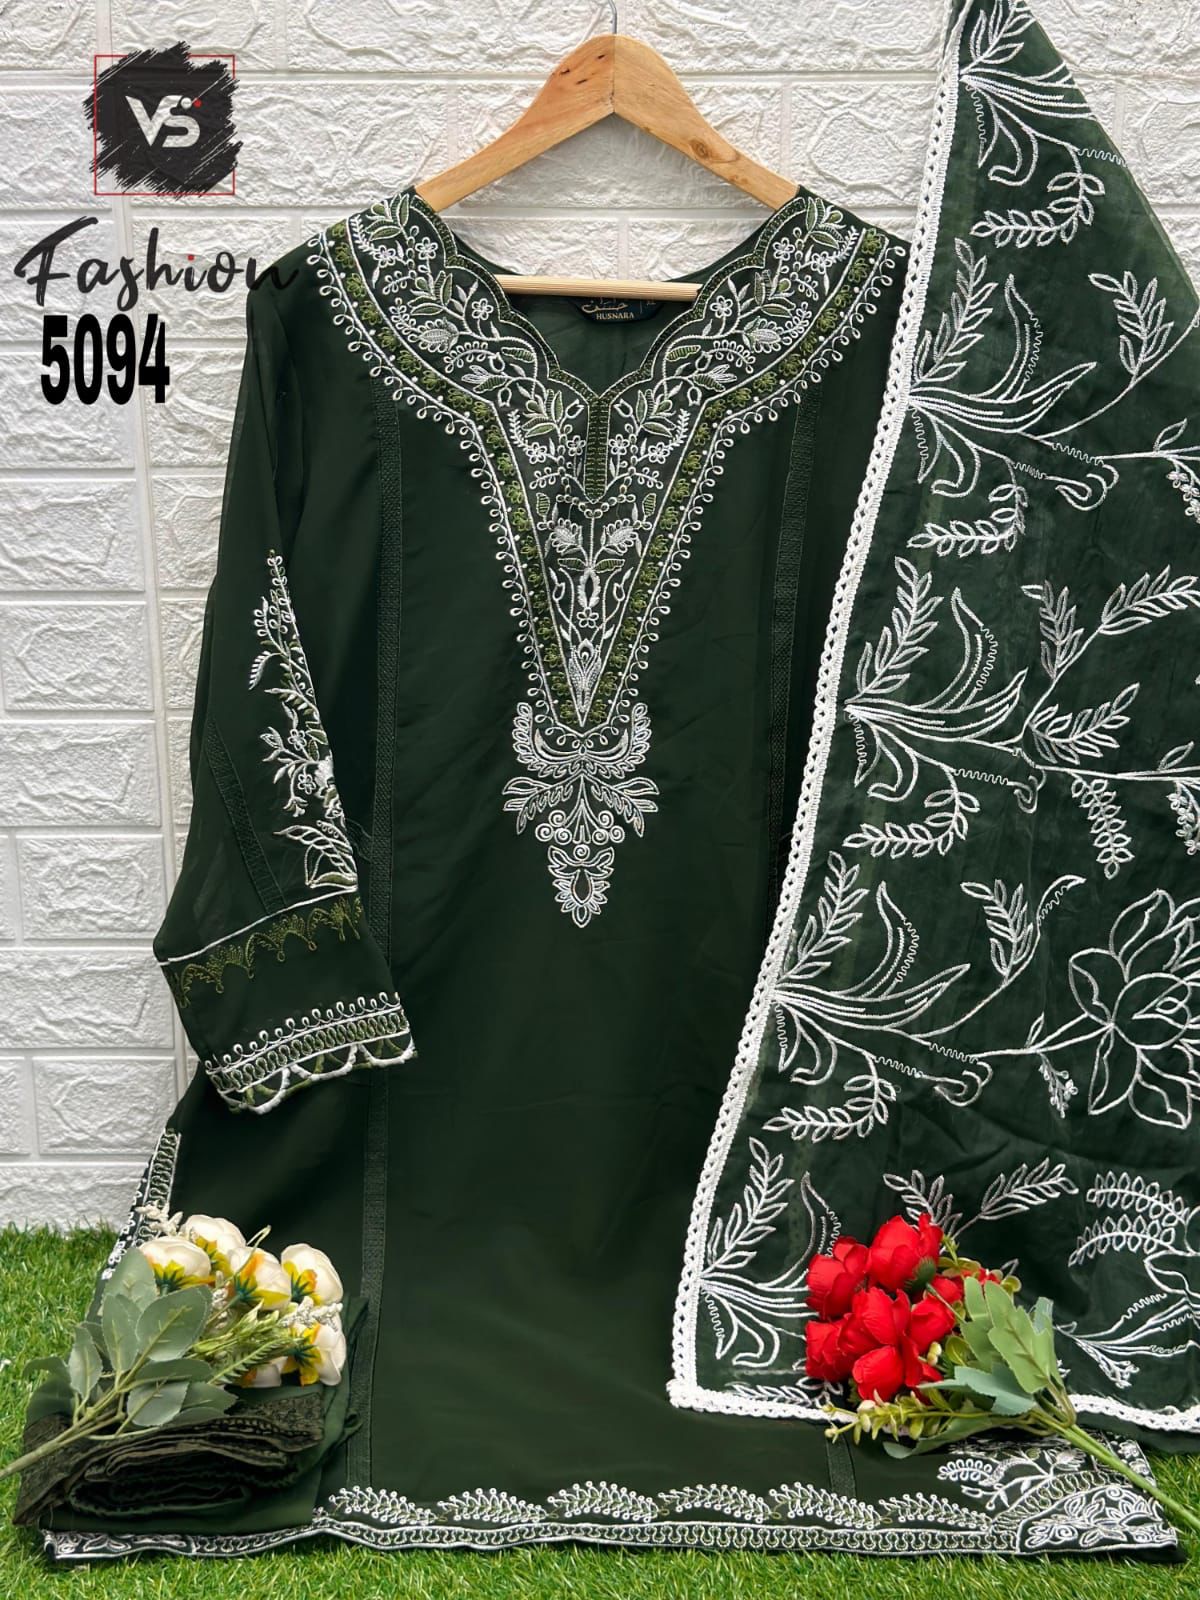 5094 Vs Fashion Georgette Pakistani Readymade Suits